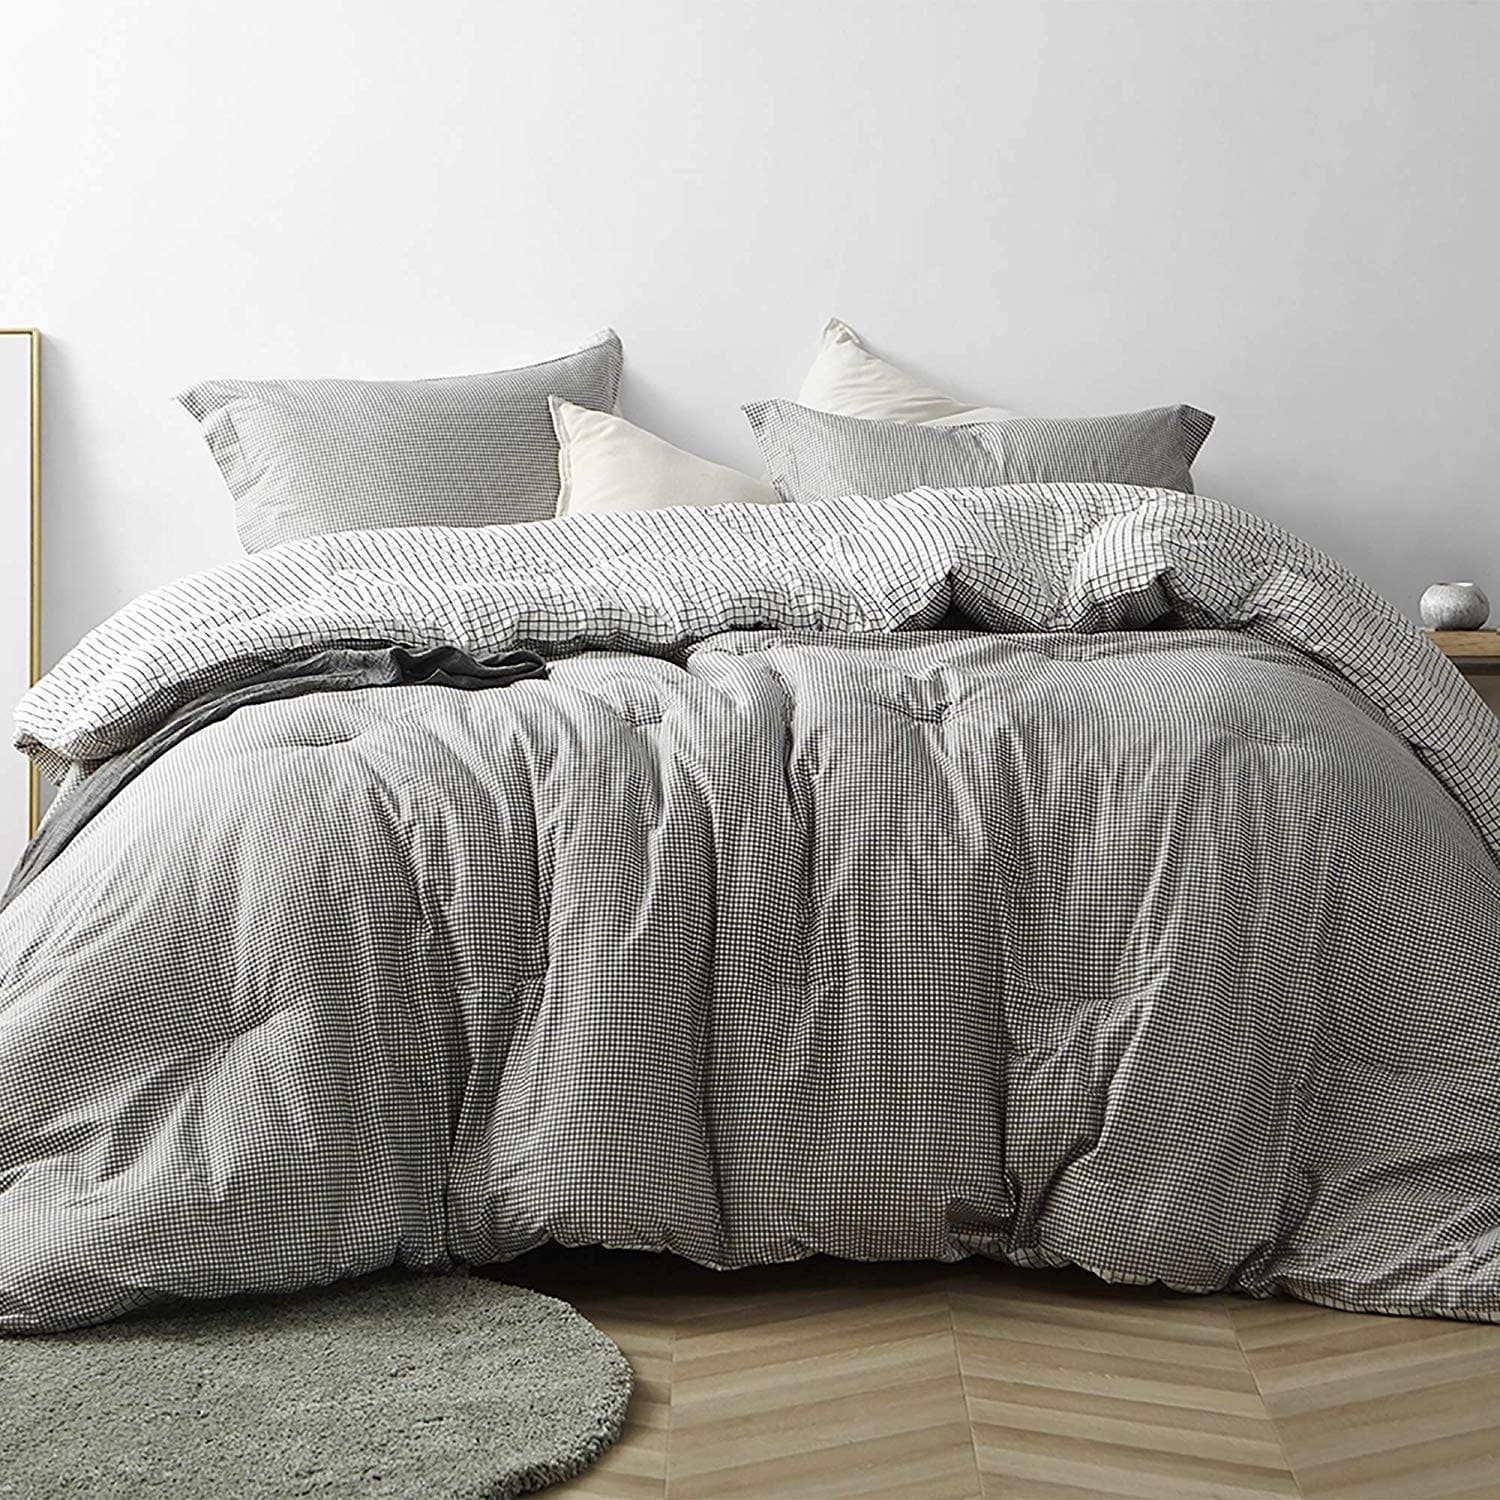 100 cotton comforter